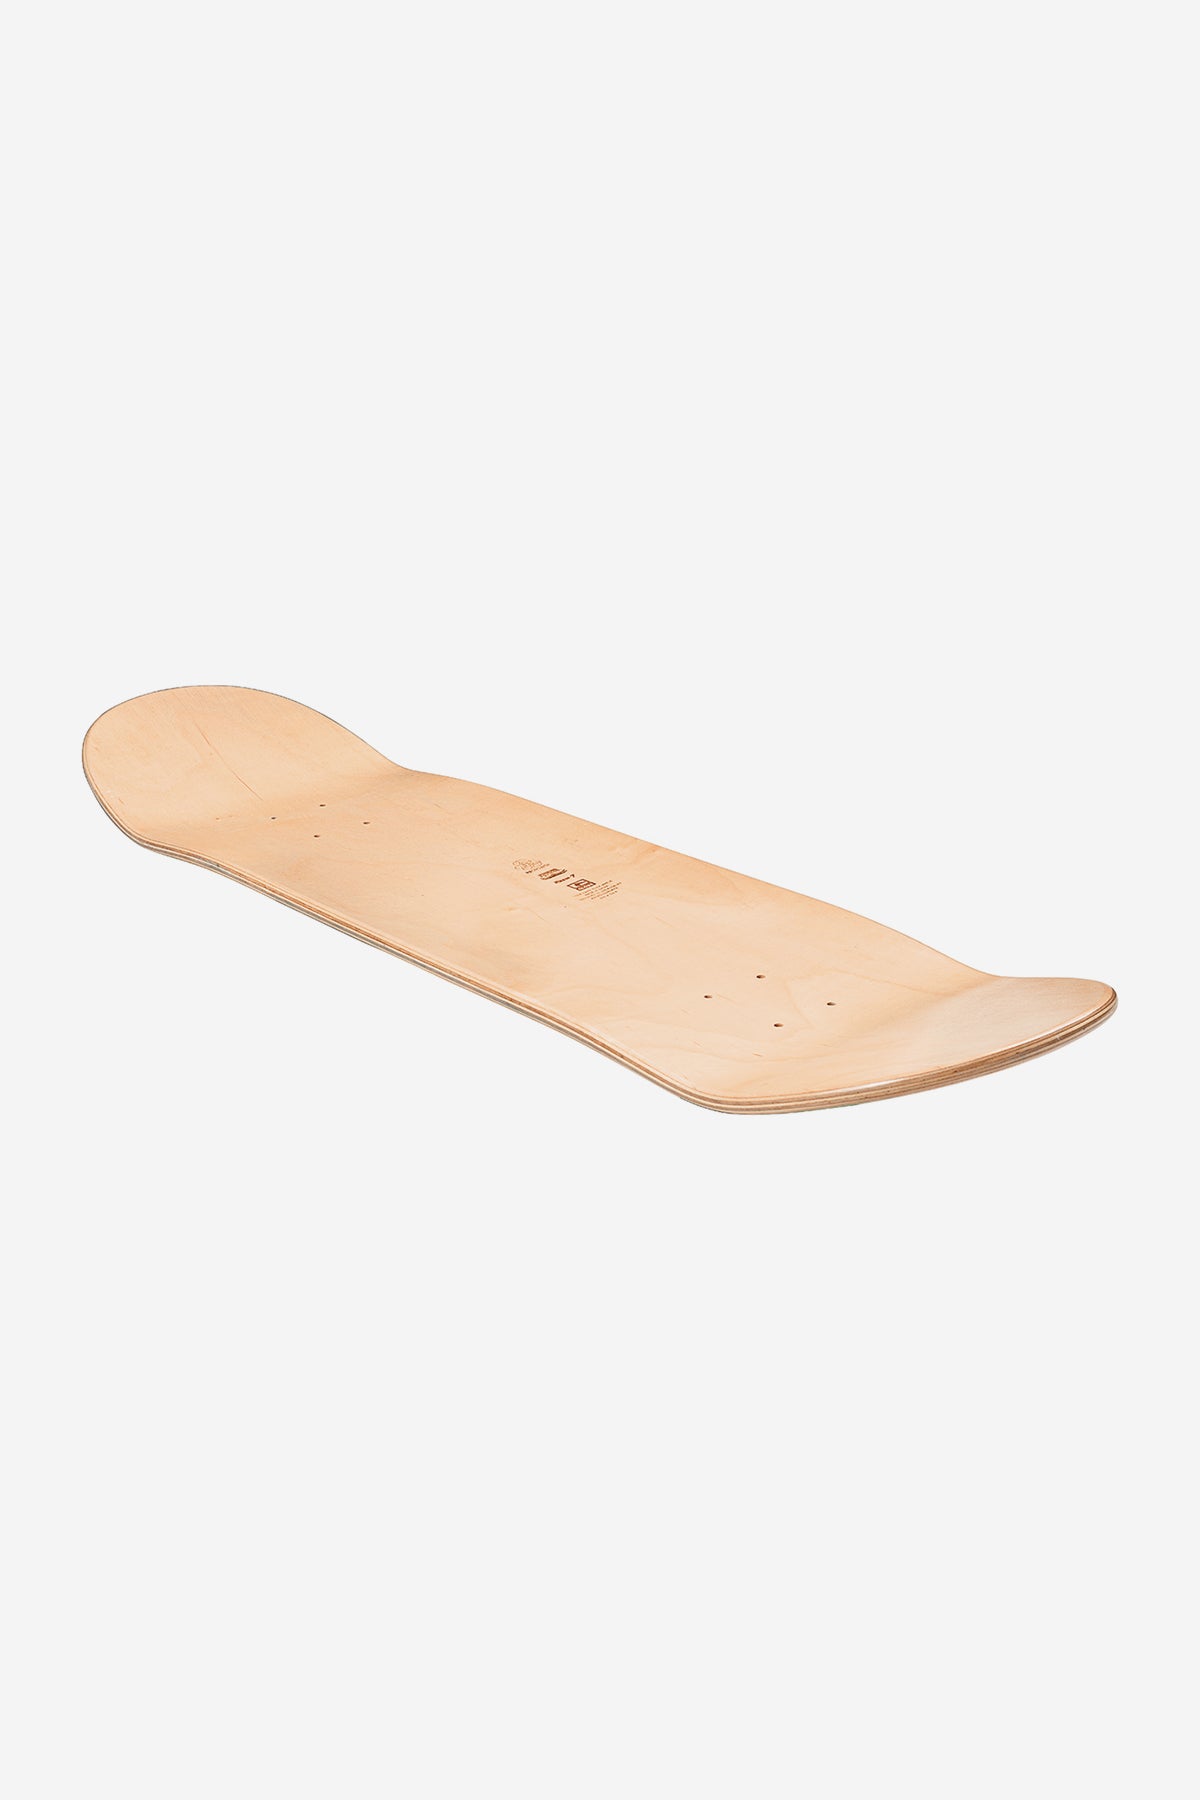 Globe - Gutstock - Sahara - 8.375" Skateboard Deck